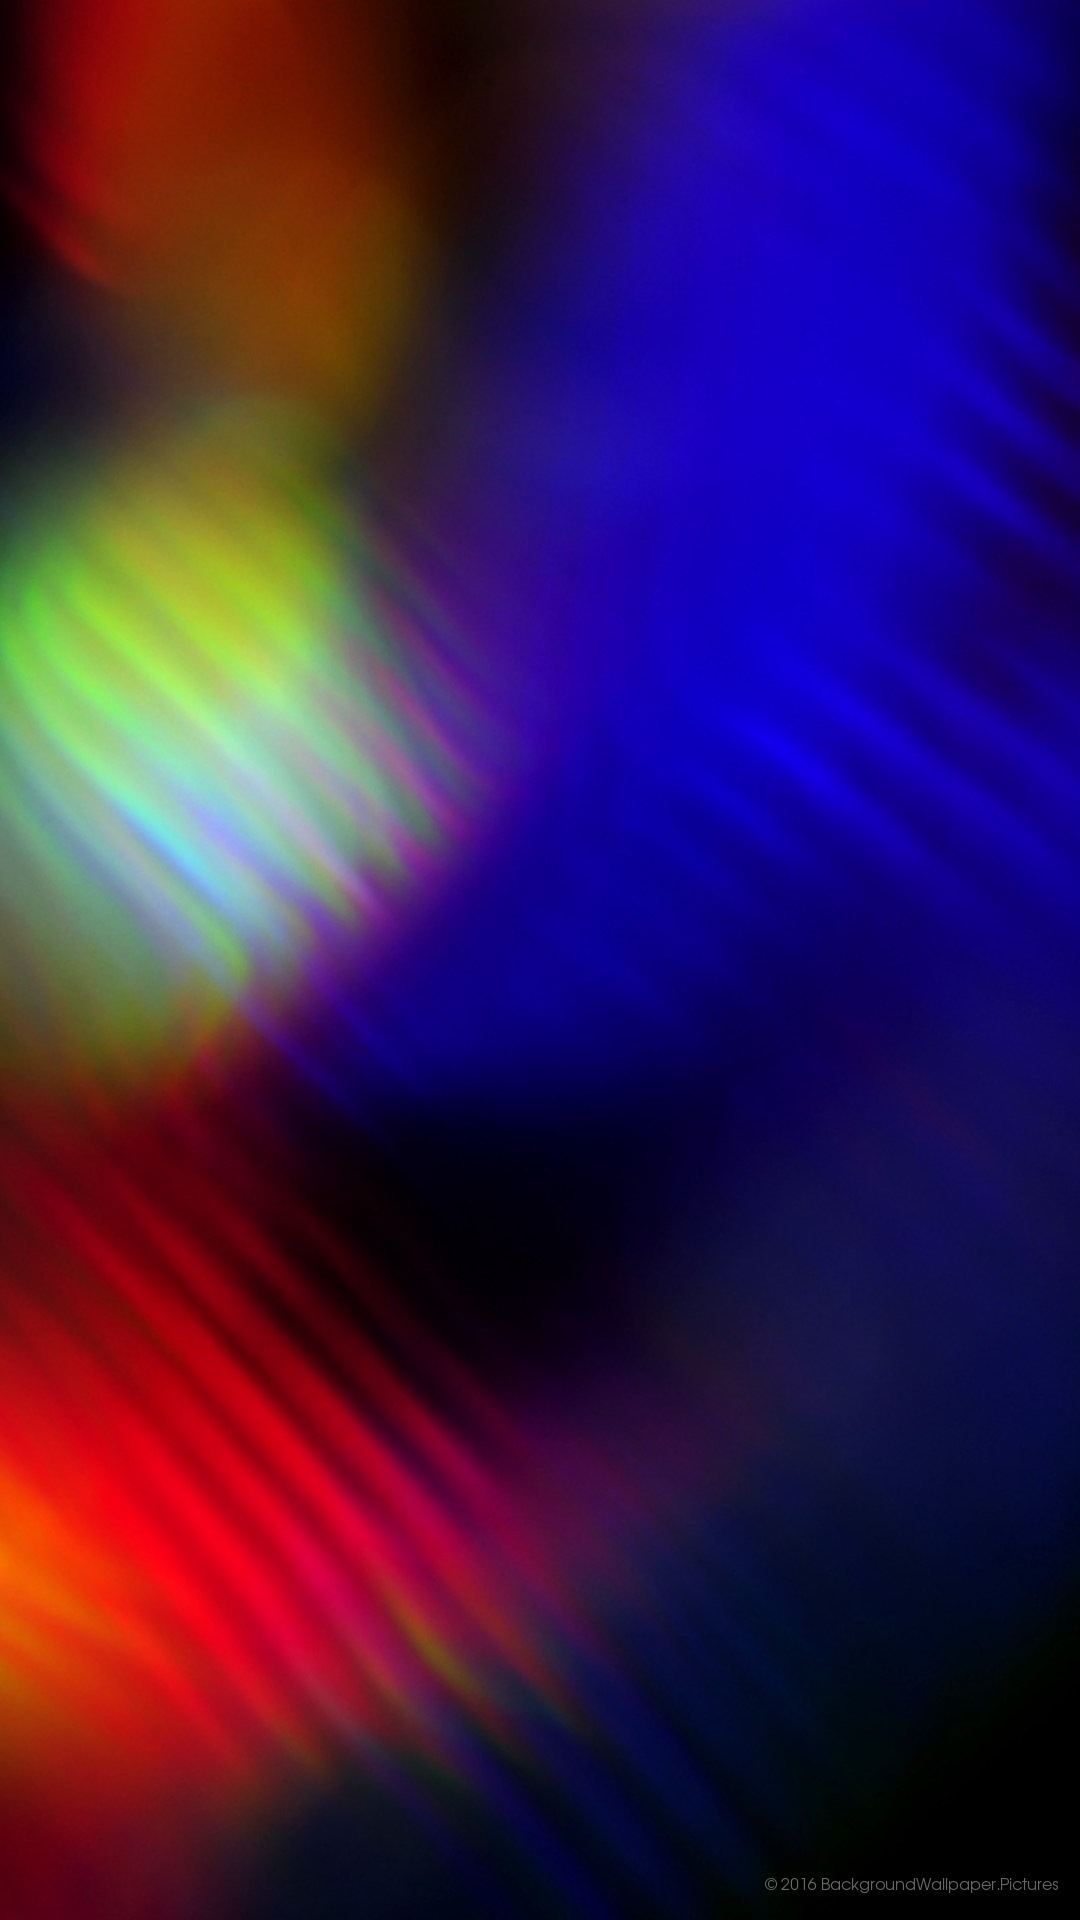 galaxy note 3 wallpaper hd 1080p,blu,viola,leggero,viola,colorfulness